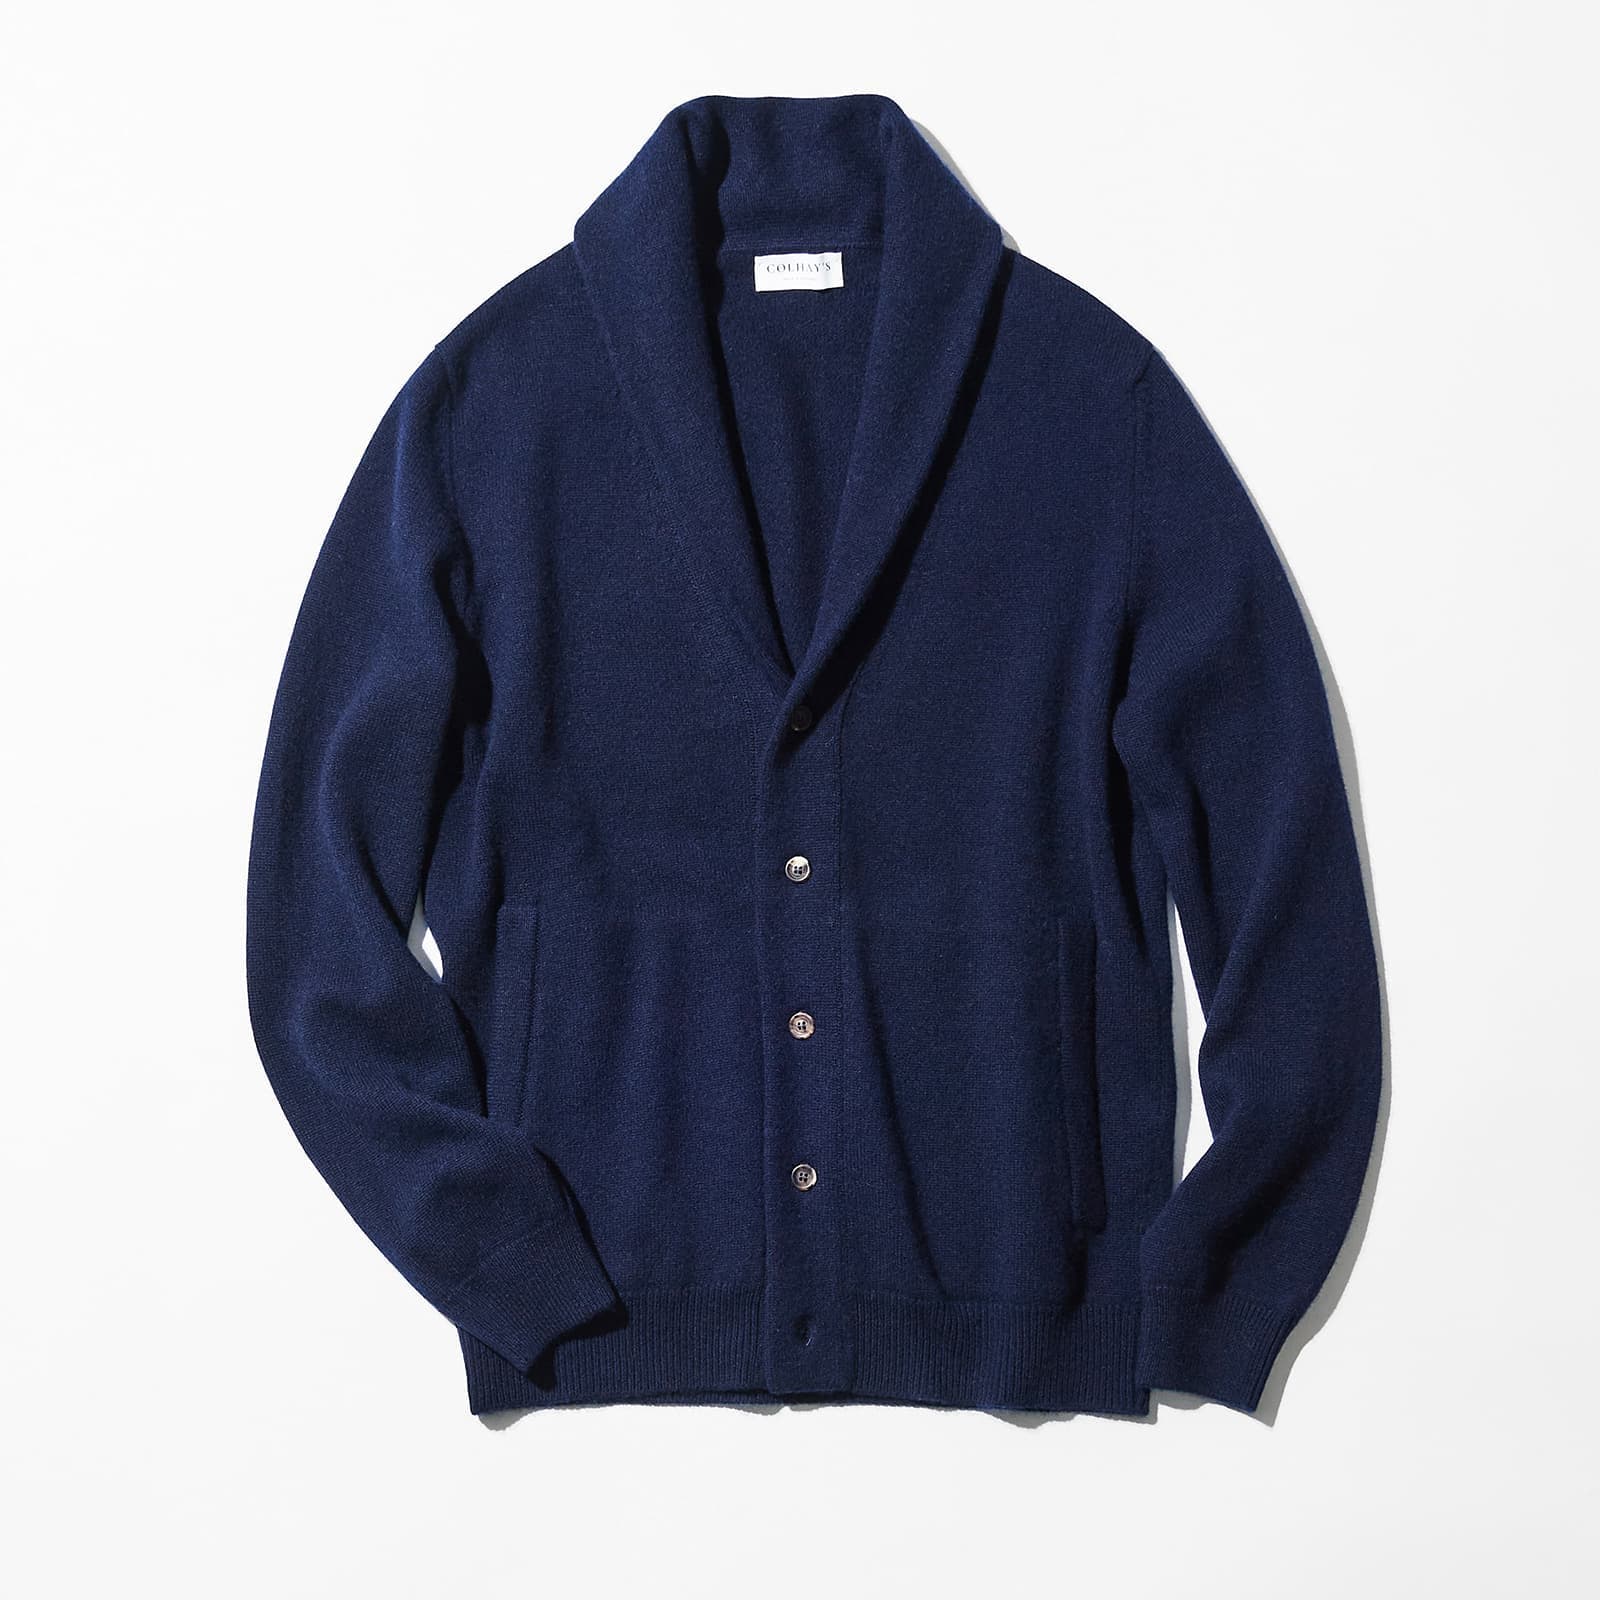 “Kolheis” shawl collar knit is 100% cashmere♡ 2